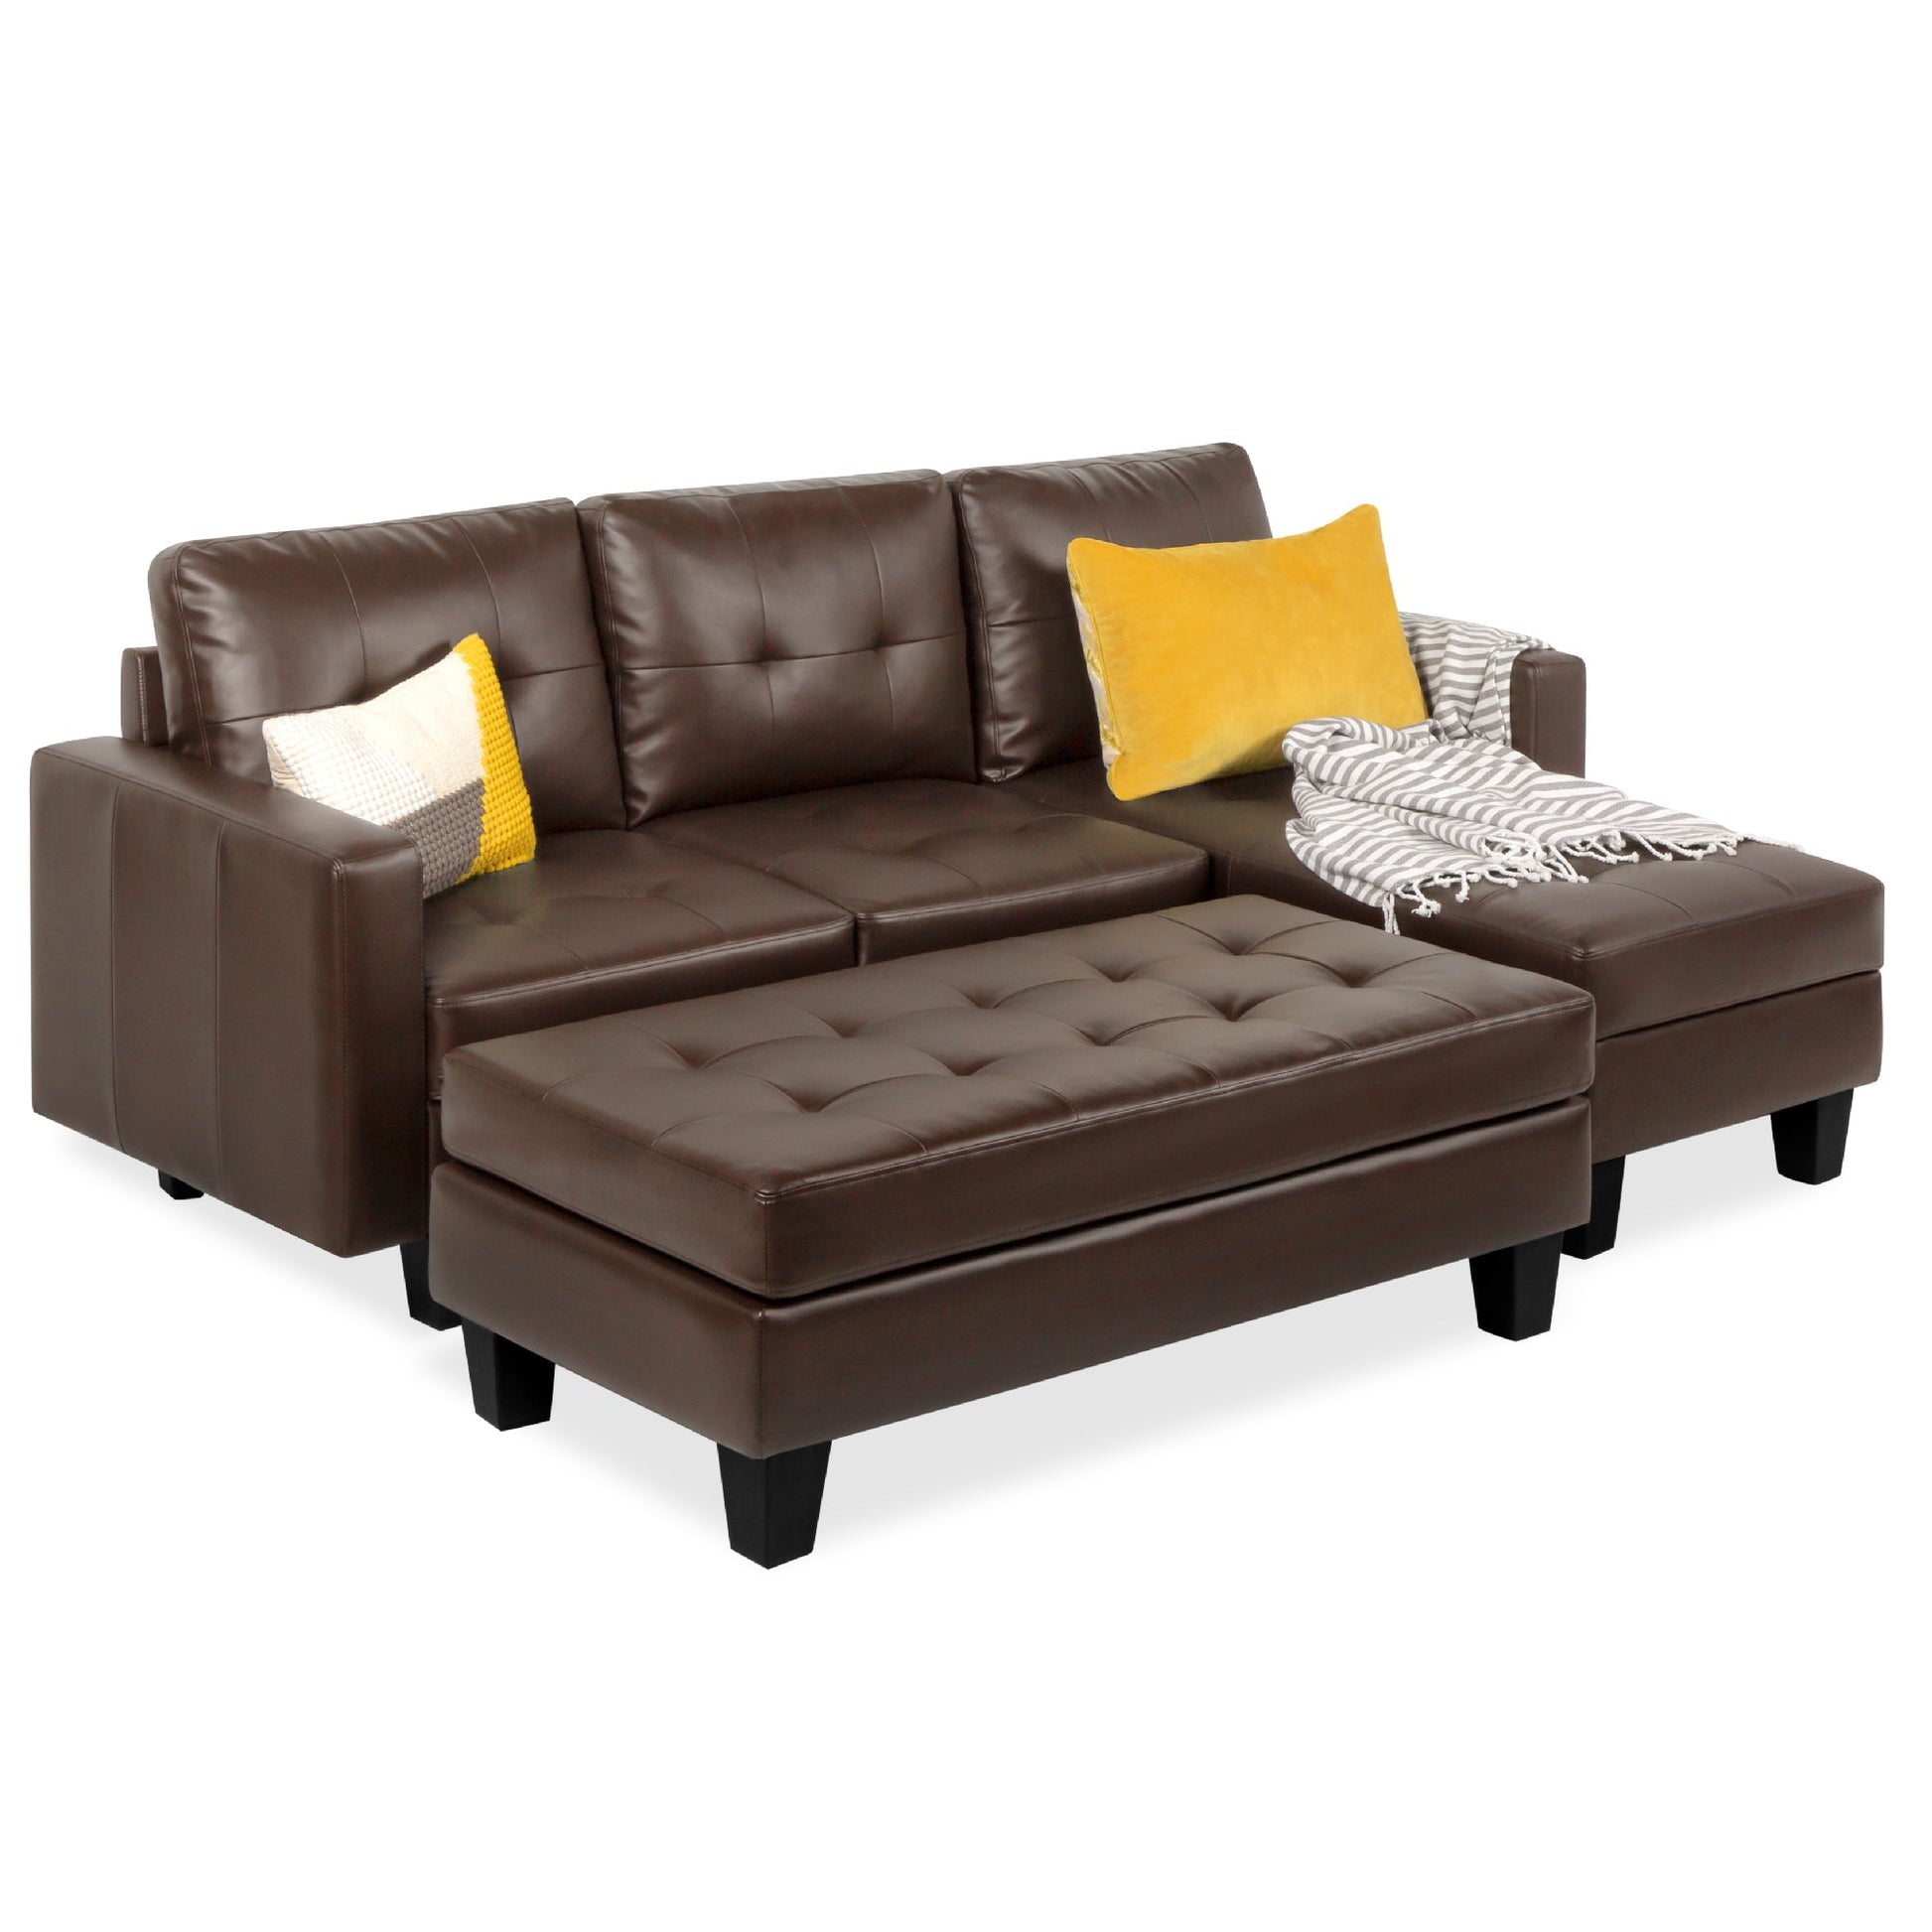 L-Shape Customizable Faux Leather Sofa Set w/ Ottoman Bench